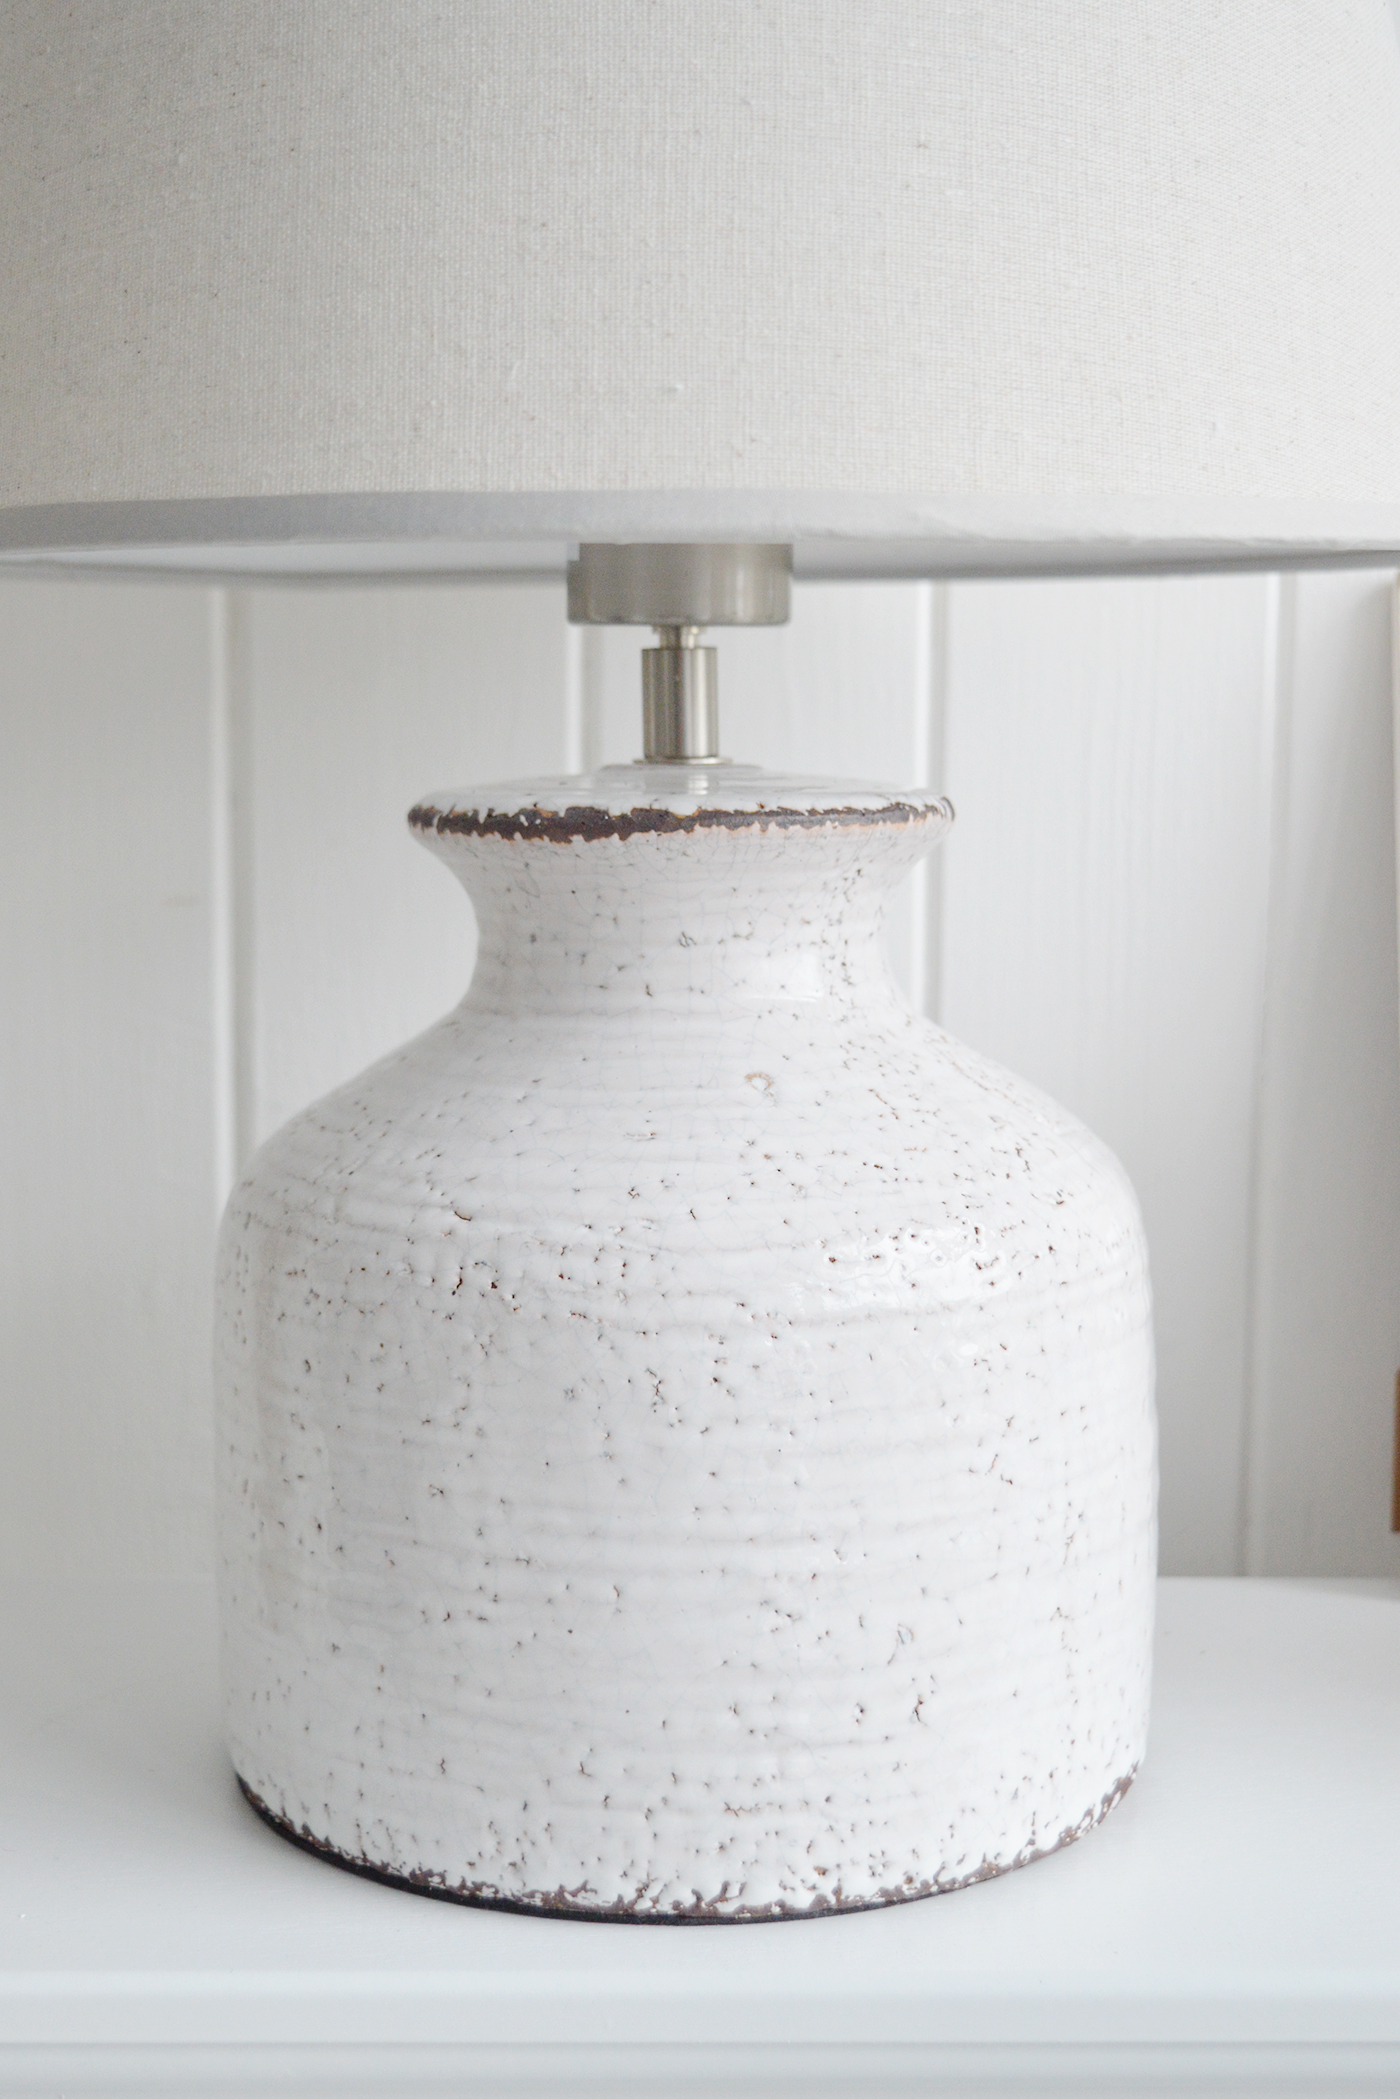 The White Compton white ceramic lamp with a glazed finish for a beautiful white coastal beach house interior